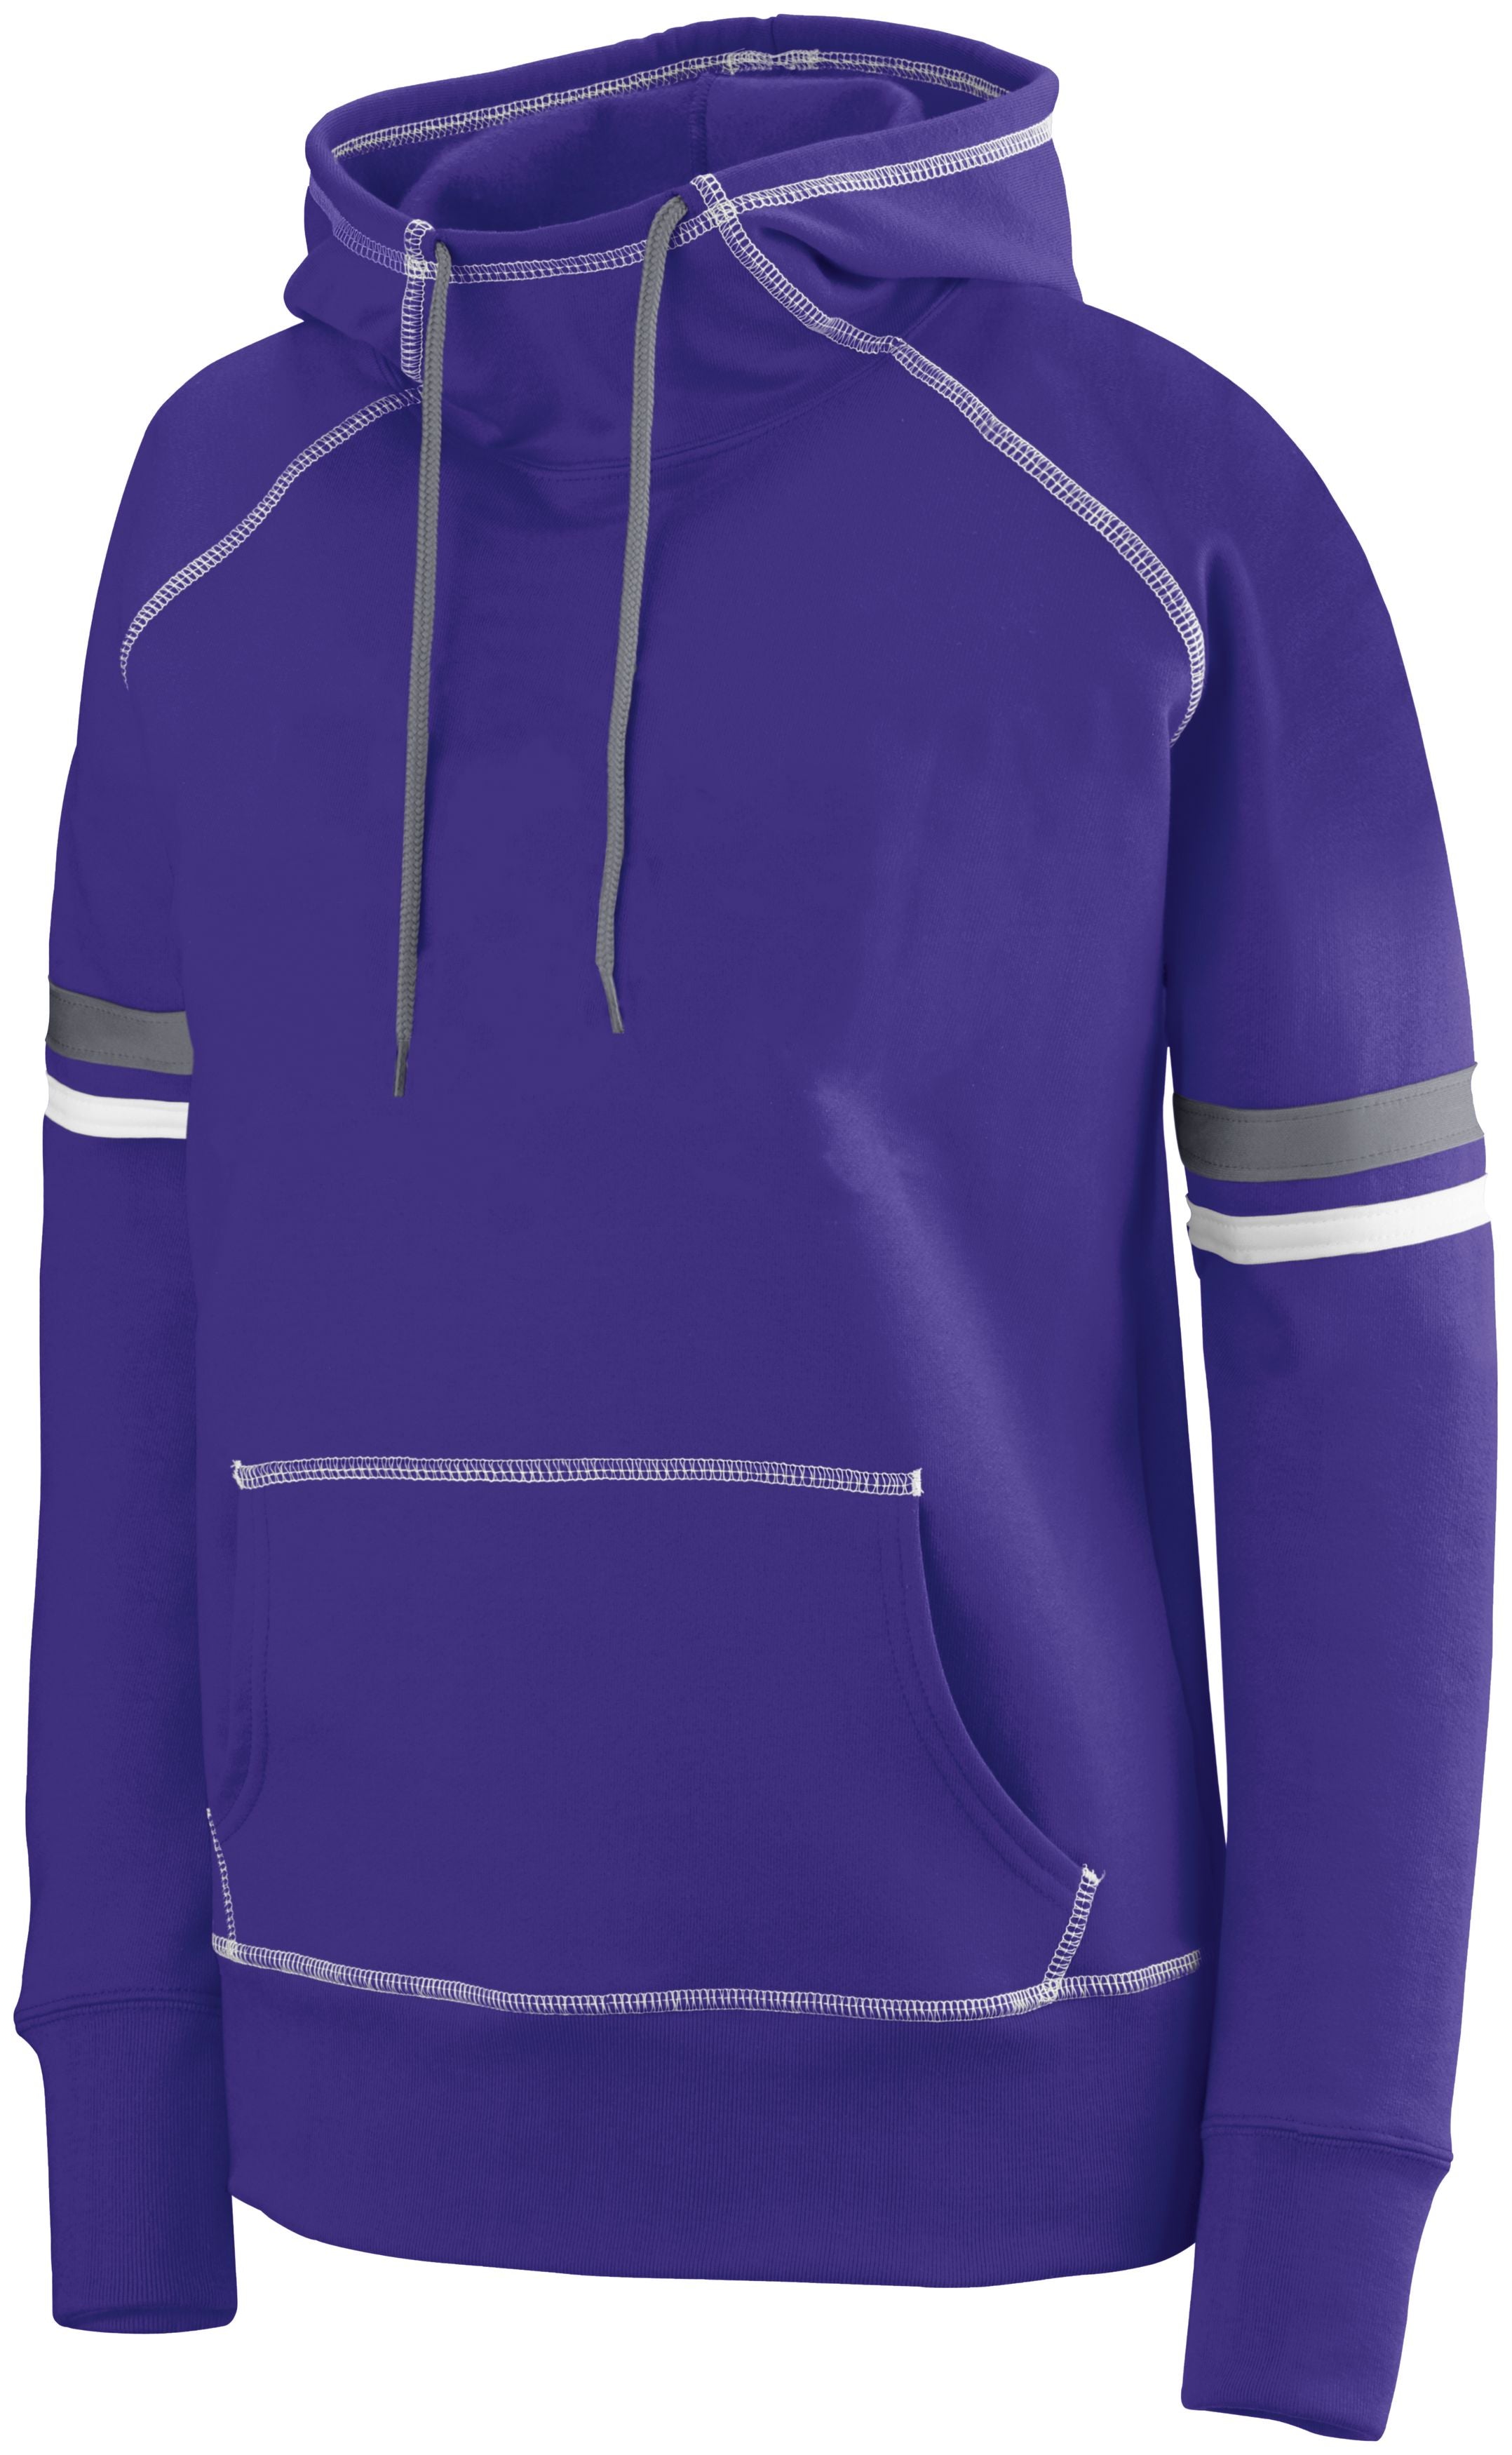 Augusta Sportswear Ladies Spry Hoodie in Purple/White/Graphite  -Part of the Ladies, Ladies-Hoodie, Hoodies, Augusta-Products product lines at KanaleyCreations.com